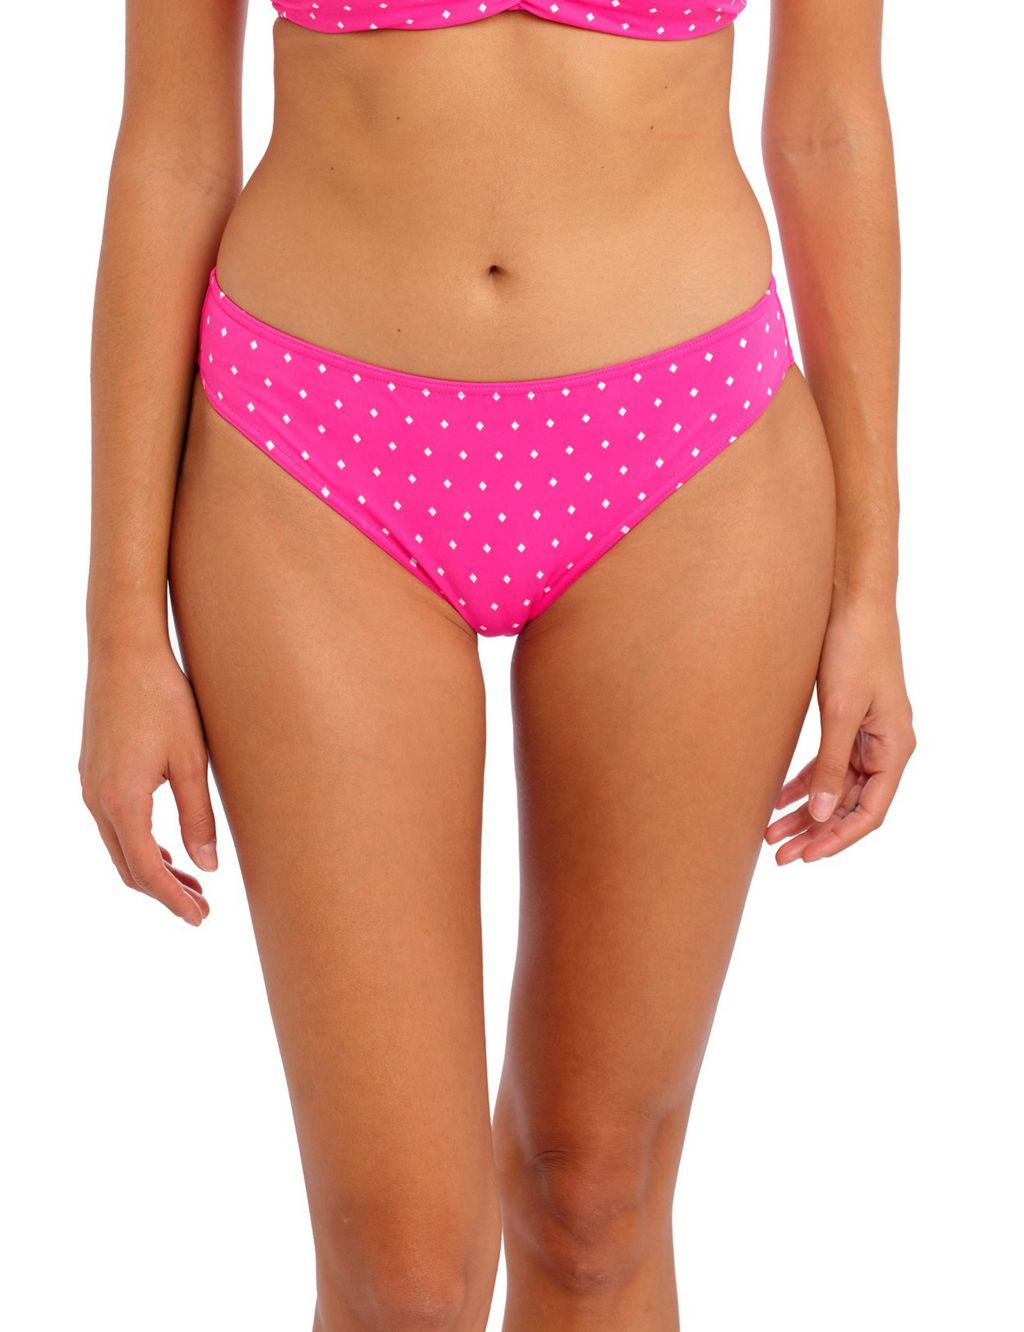 Jewel Cove Hipster Bikini Bottoms image 1